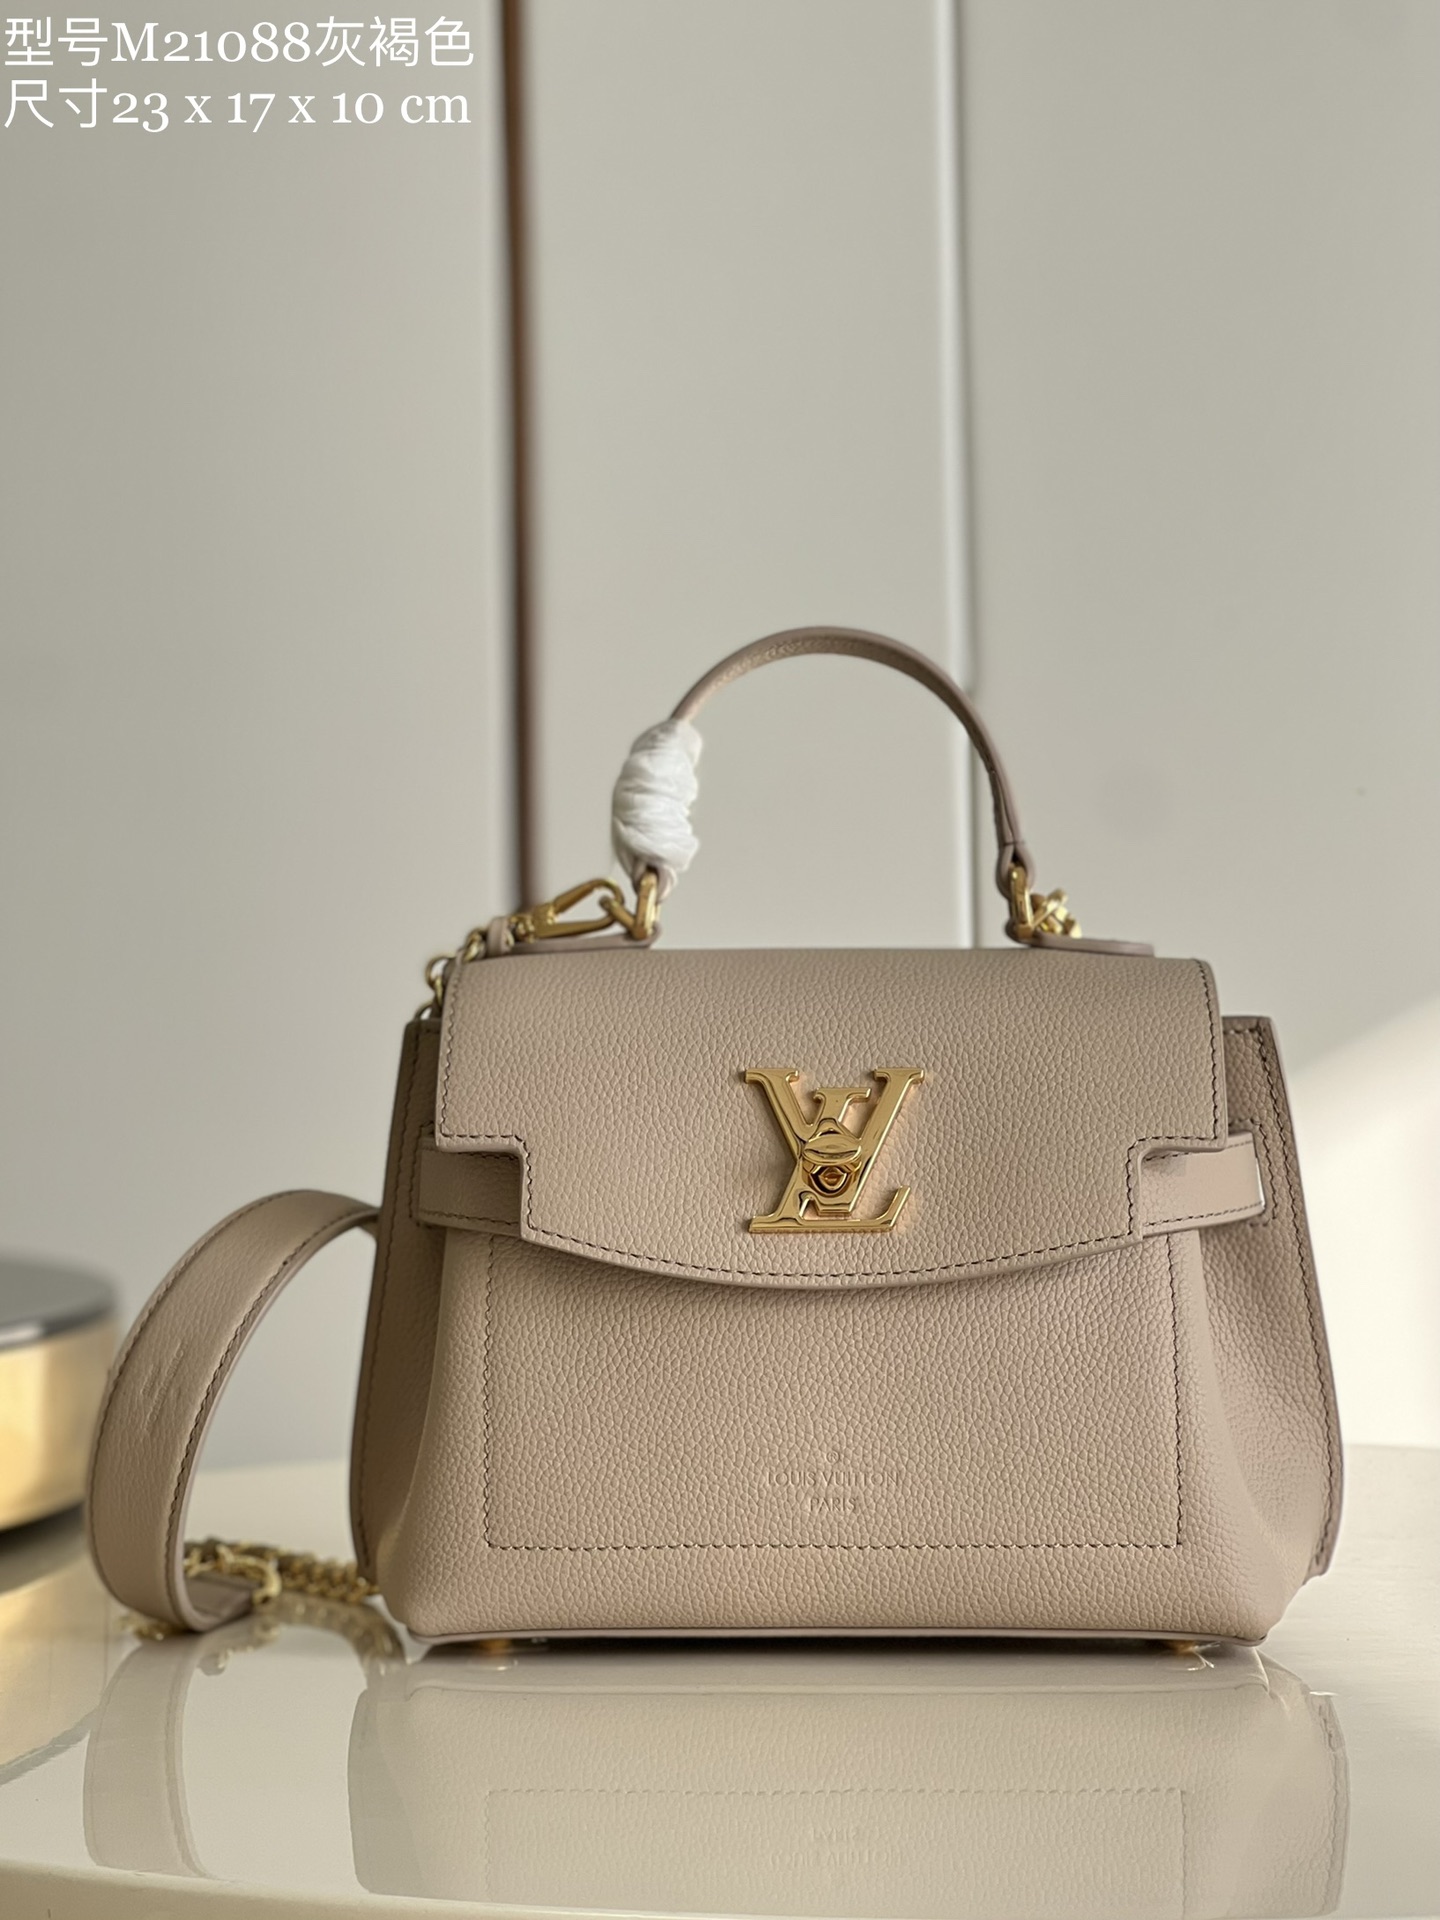 Louis Vuitton LV Lockme Ever Bags Handbags Grey Weave Cowhide Mini M21088